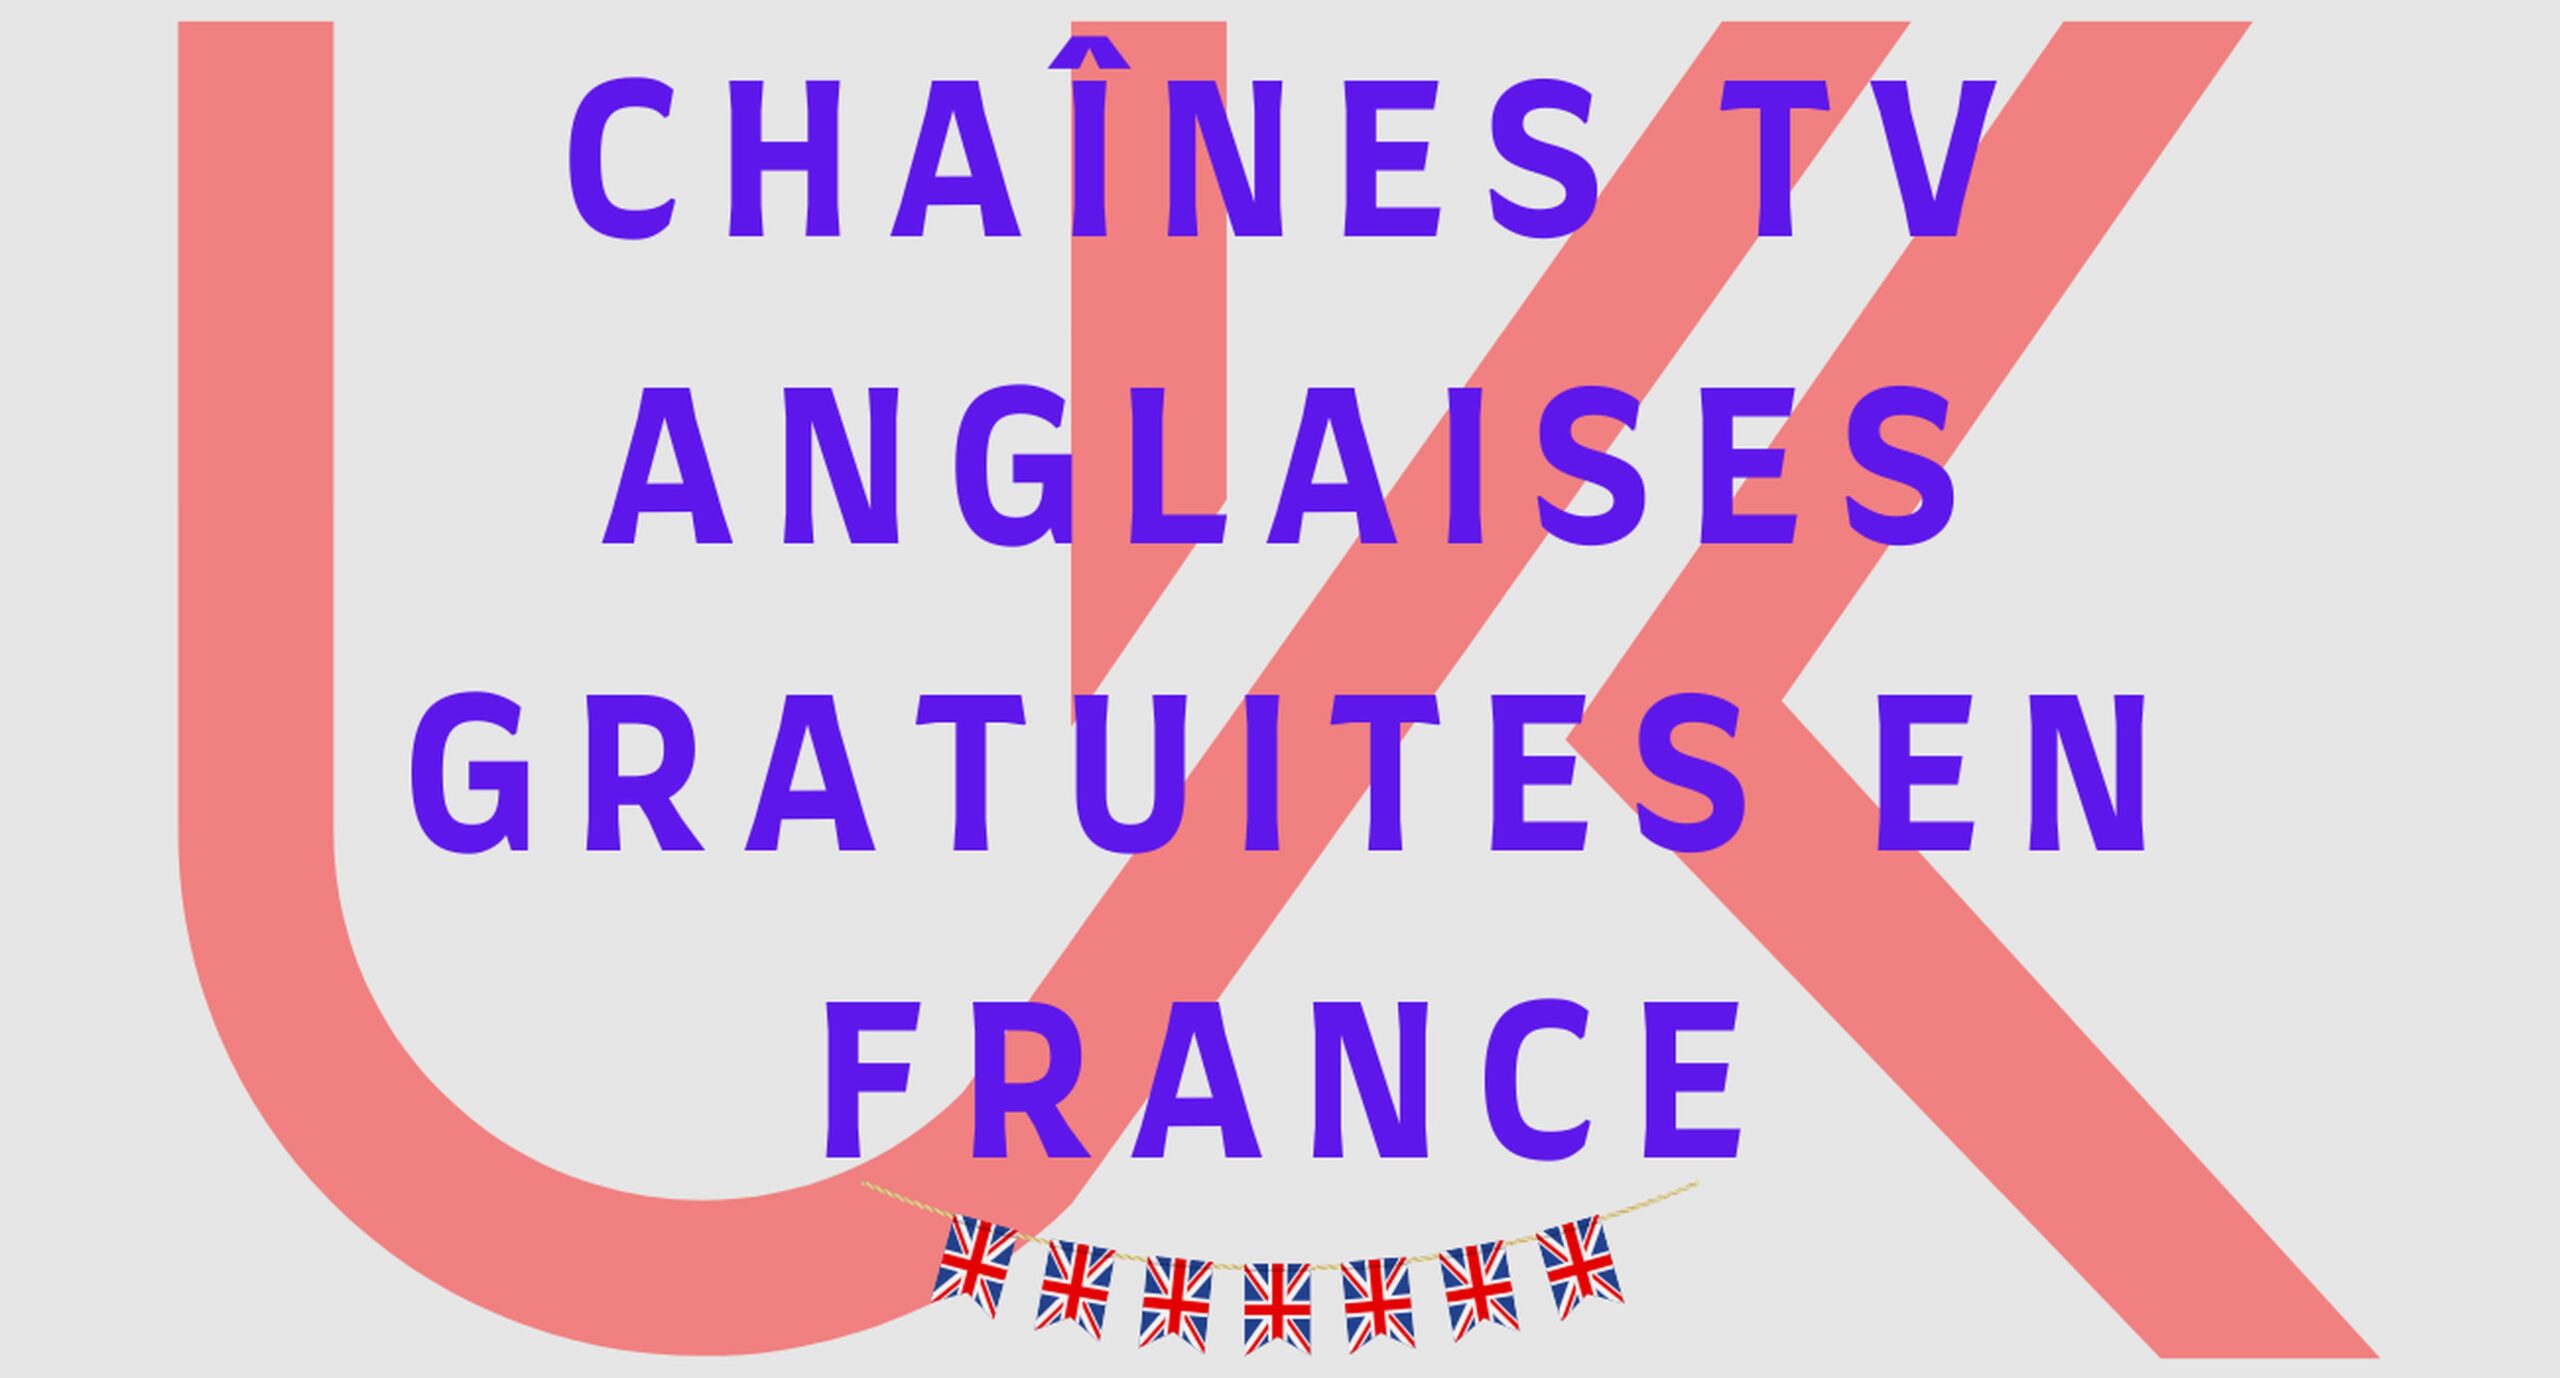 Chaînes TV Anglaises gratuites en France - 55 Chaînes TV disponibles 3